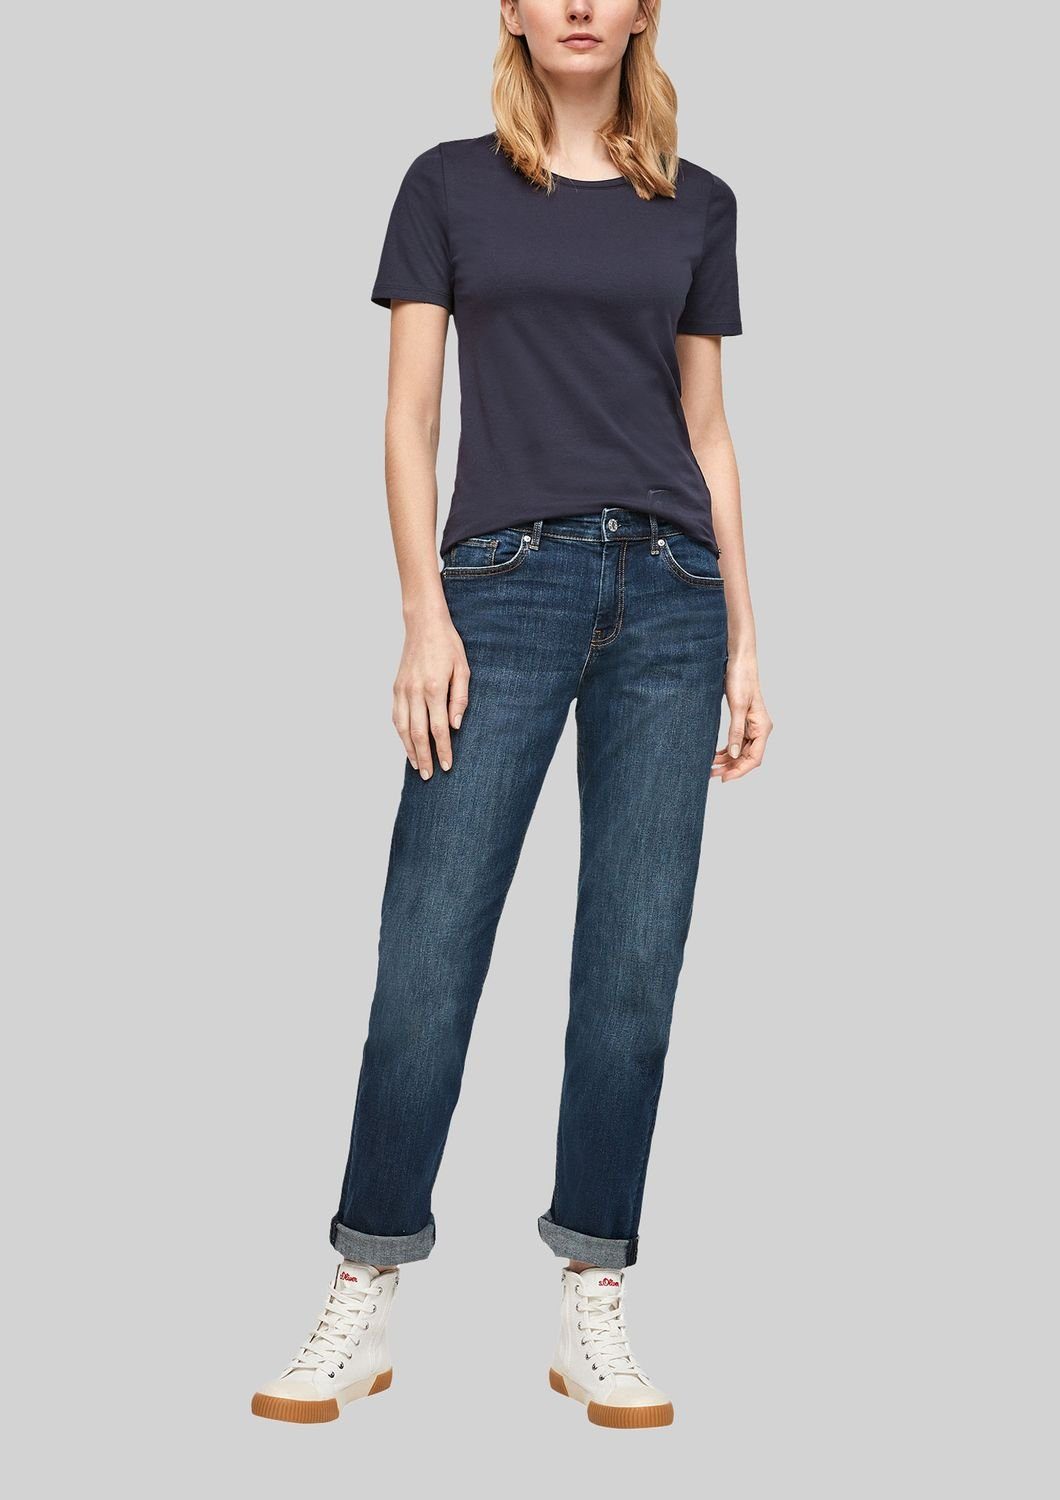 Basic Fit, Stück 2 Slim s.Oliver Single-Jersey softer T-Shirt Navy Qualität, aus